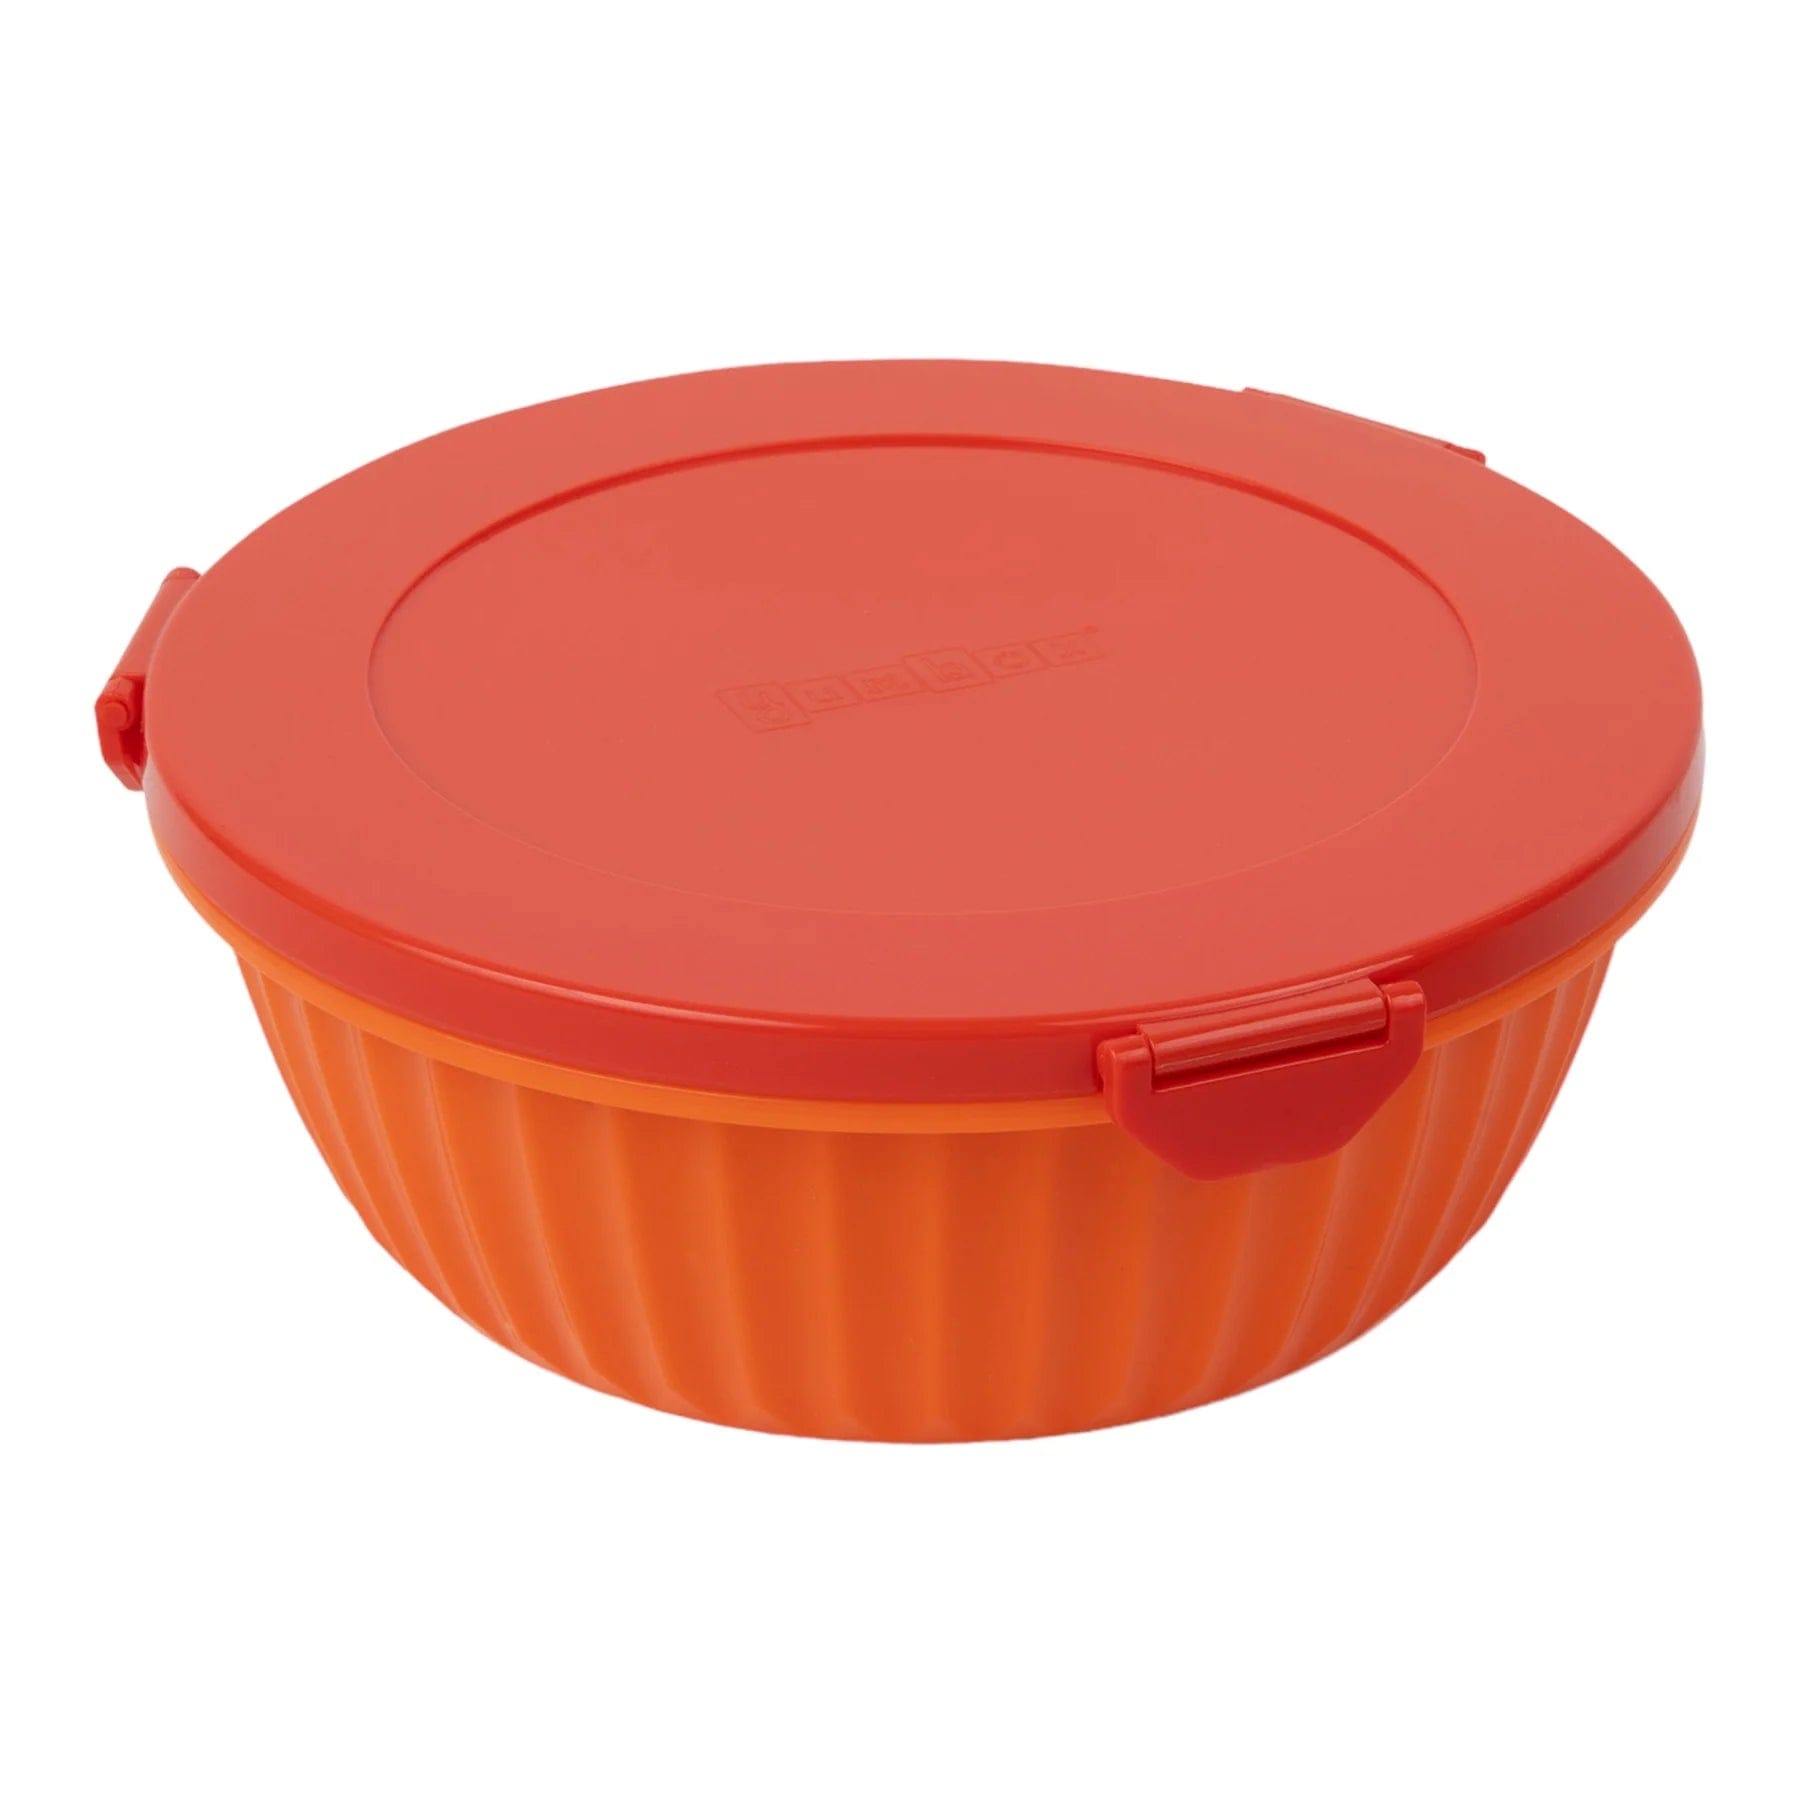 Yumbox Poke Bowl - 3 Compartment Tangerine